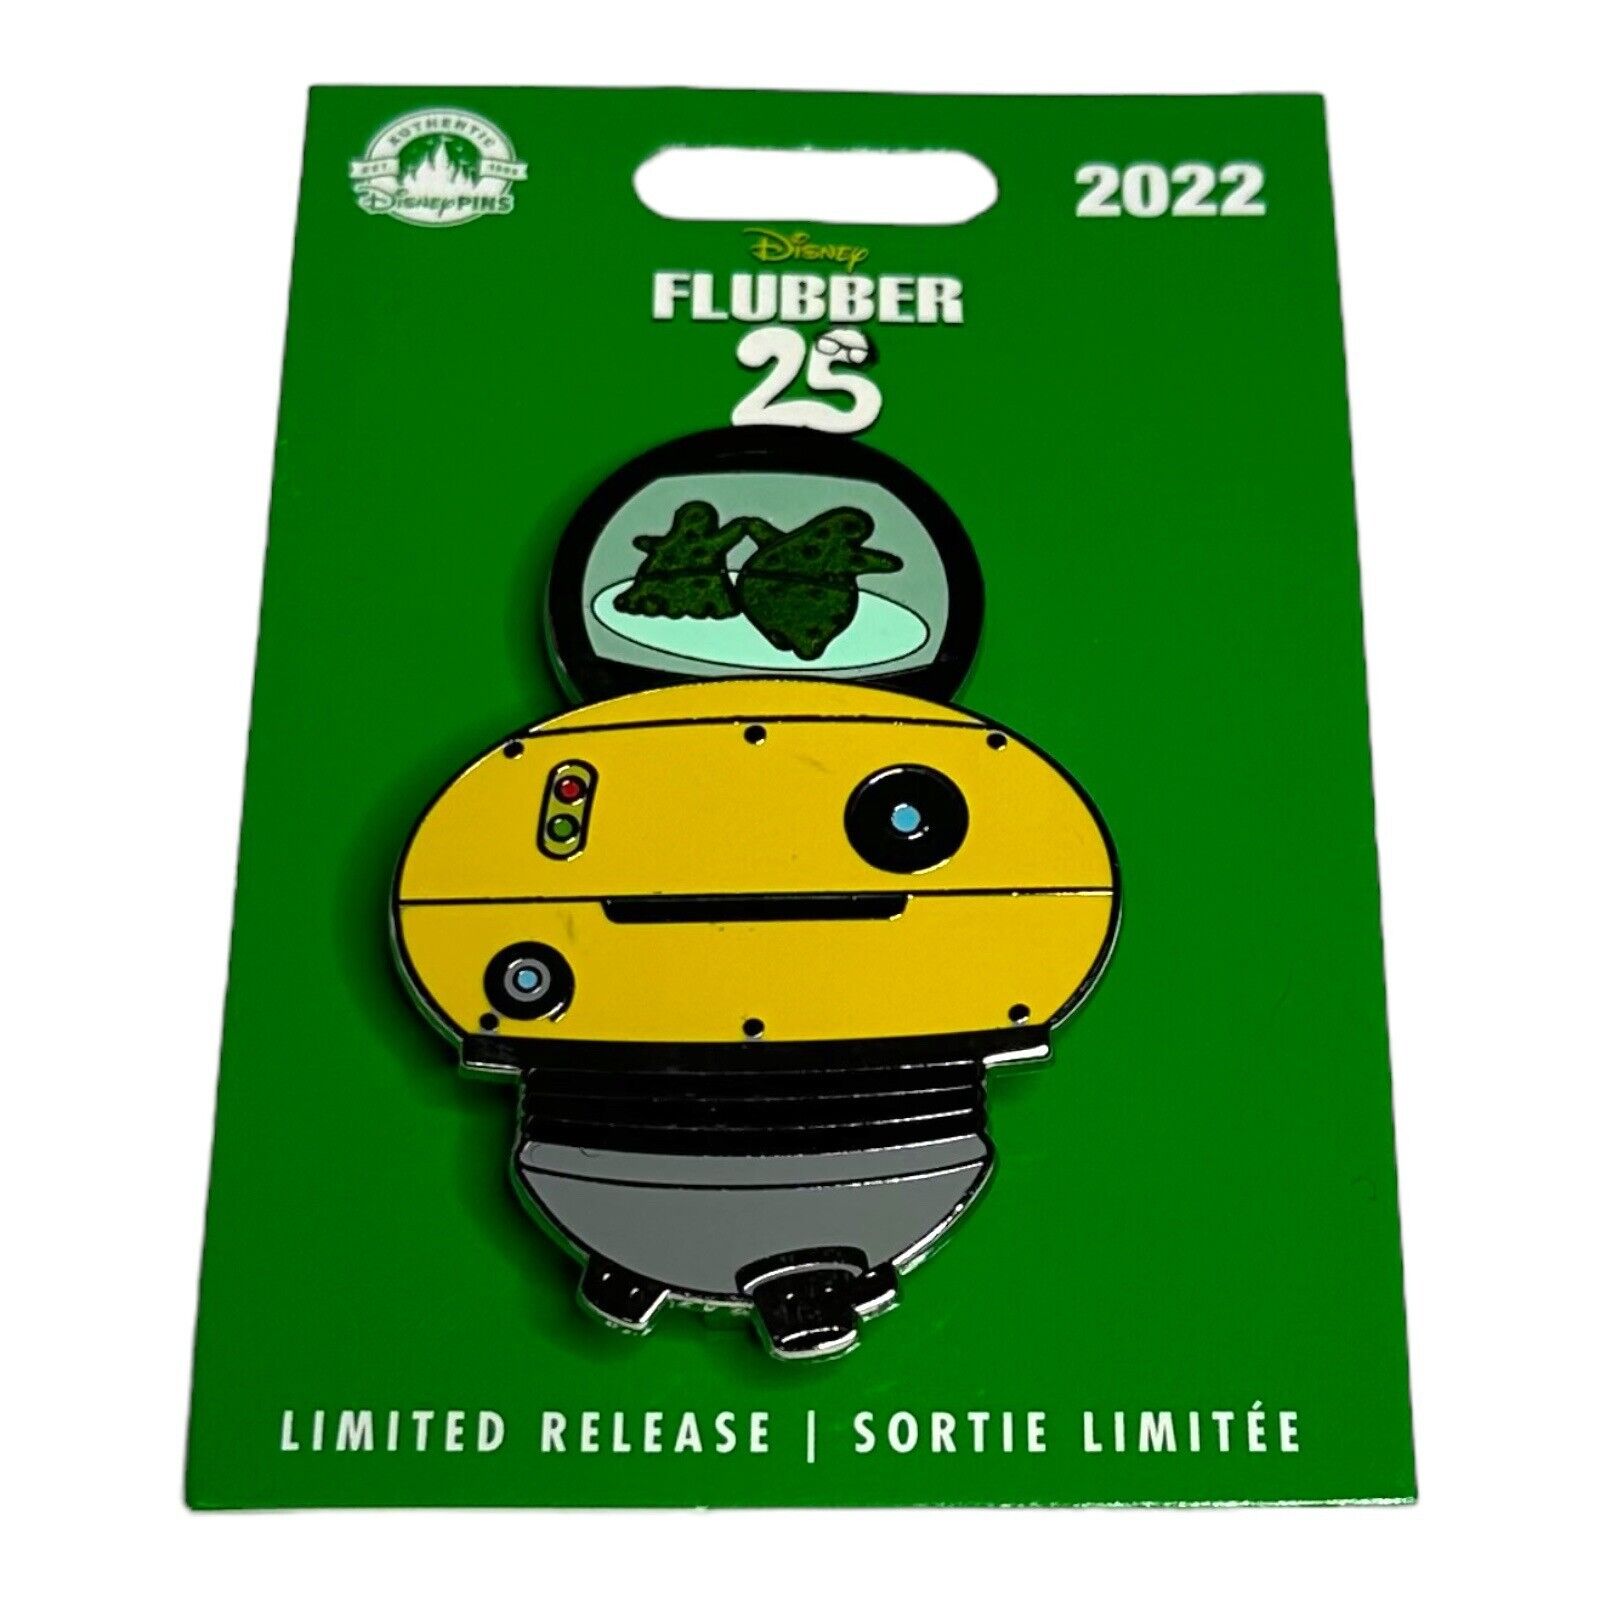 2022 Disney Parks Flubber 25th Anniversary Pin